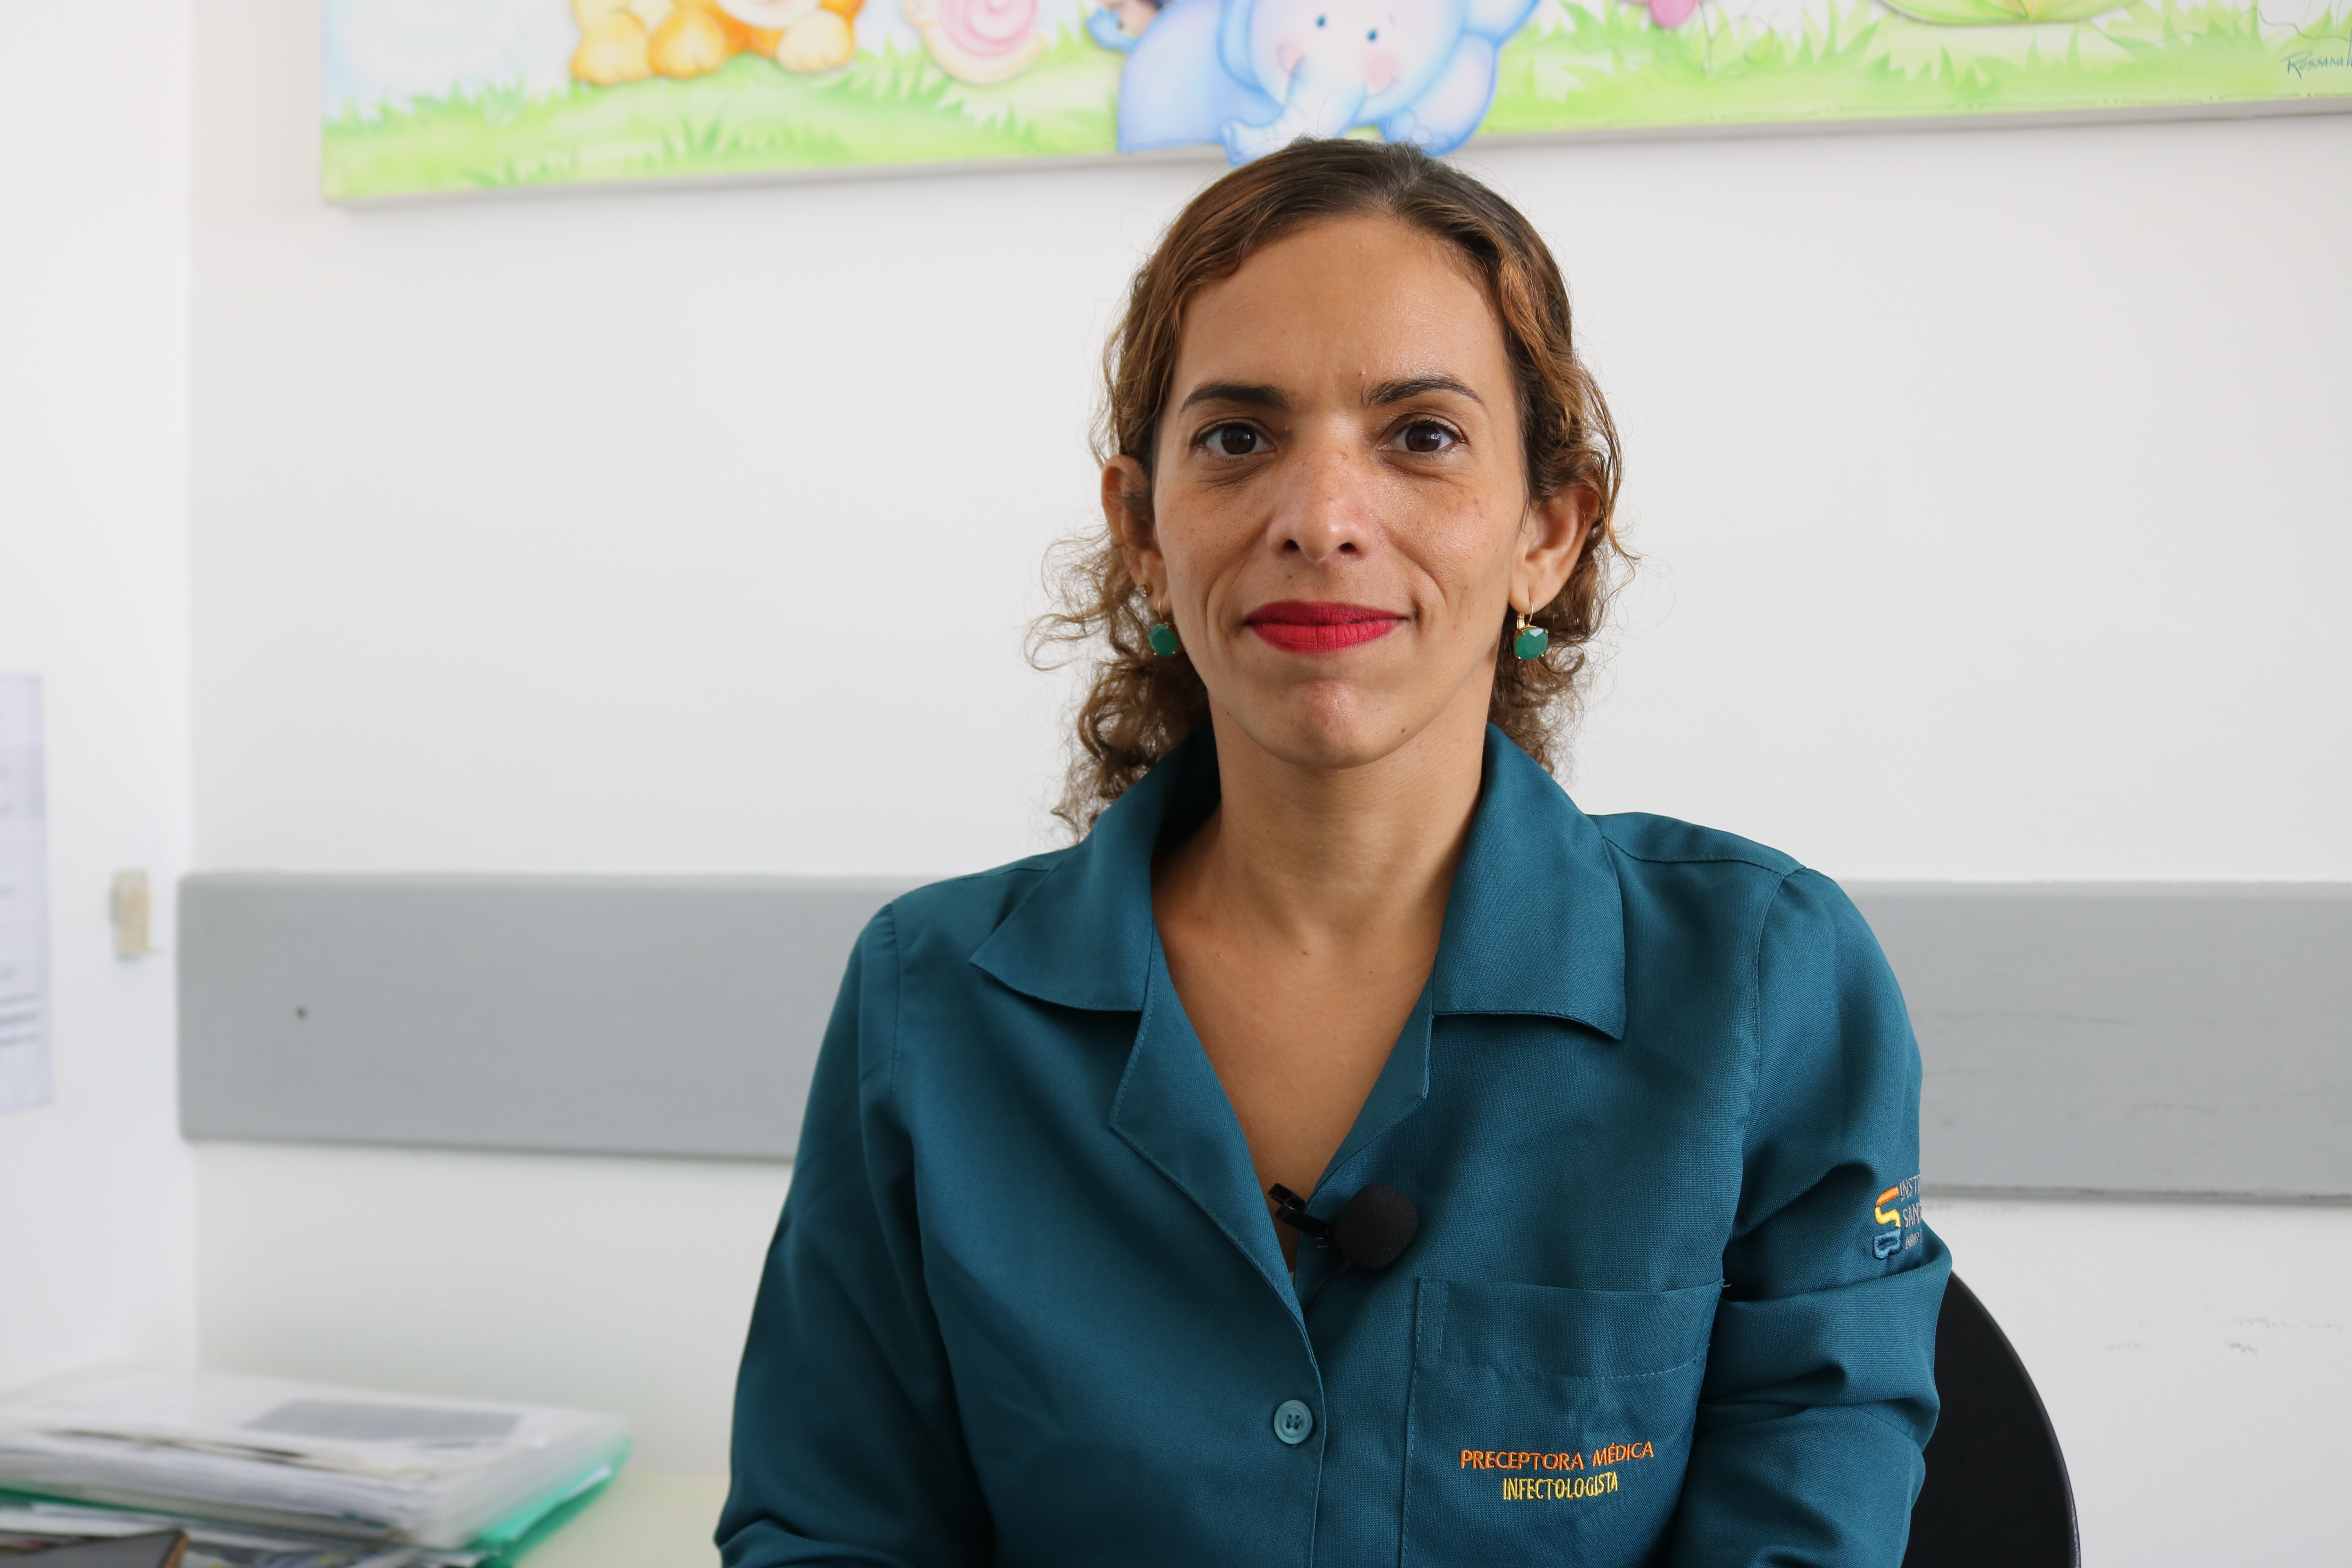 Carolina Damásio, infectologista do ISD _ Foto ASCOM ISD (1)